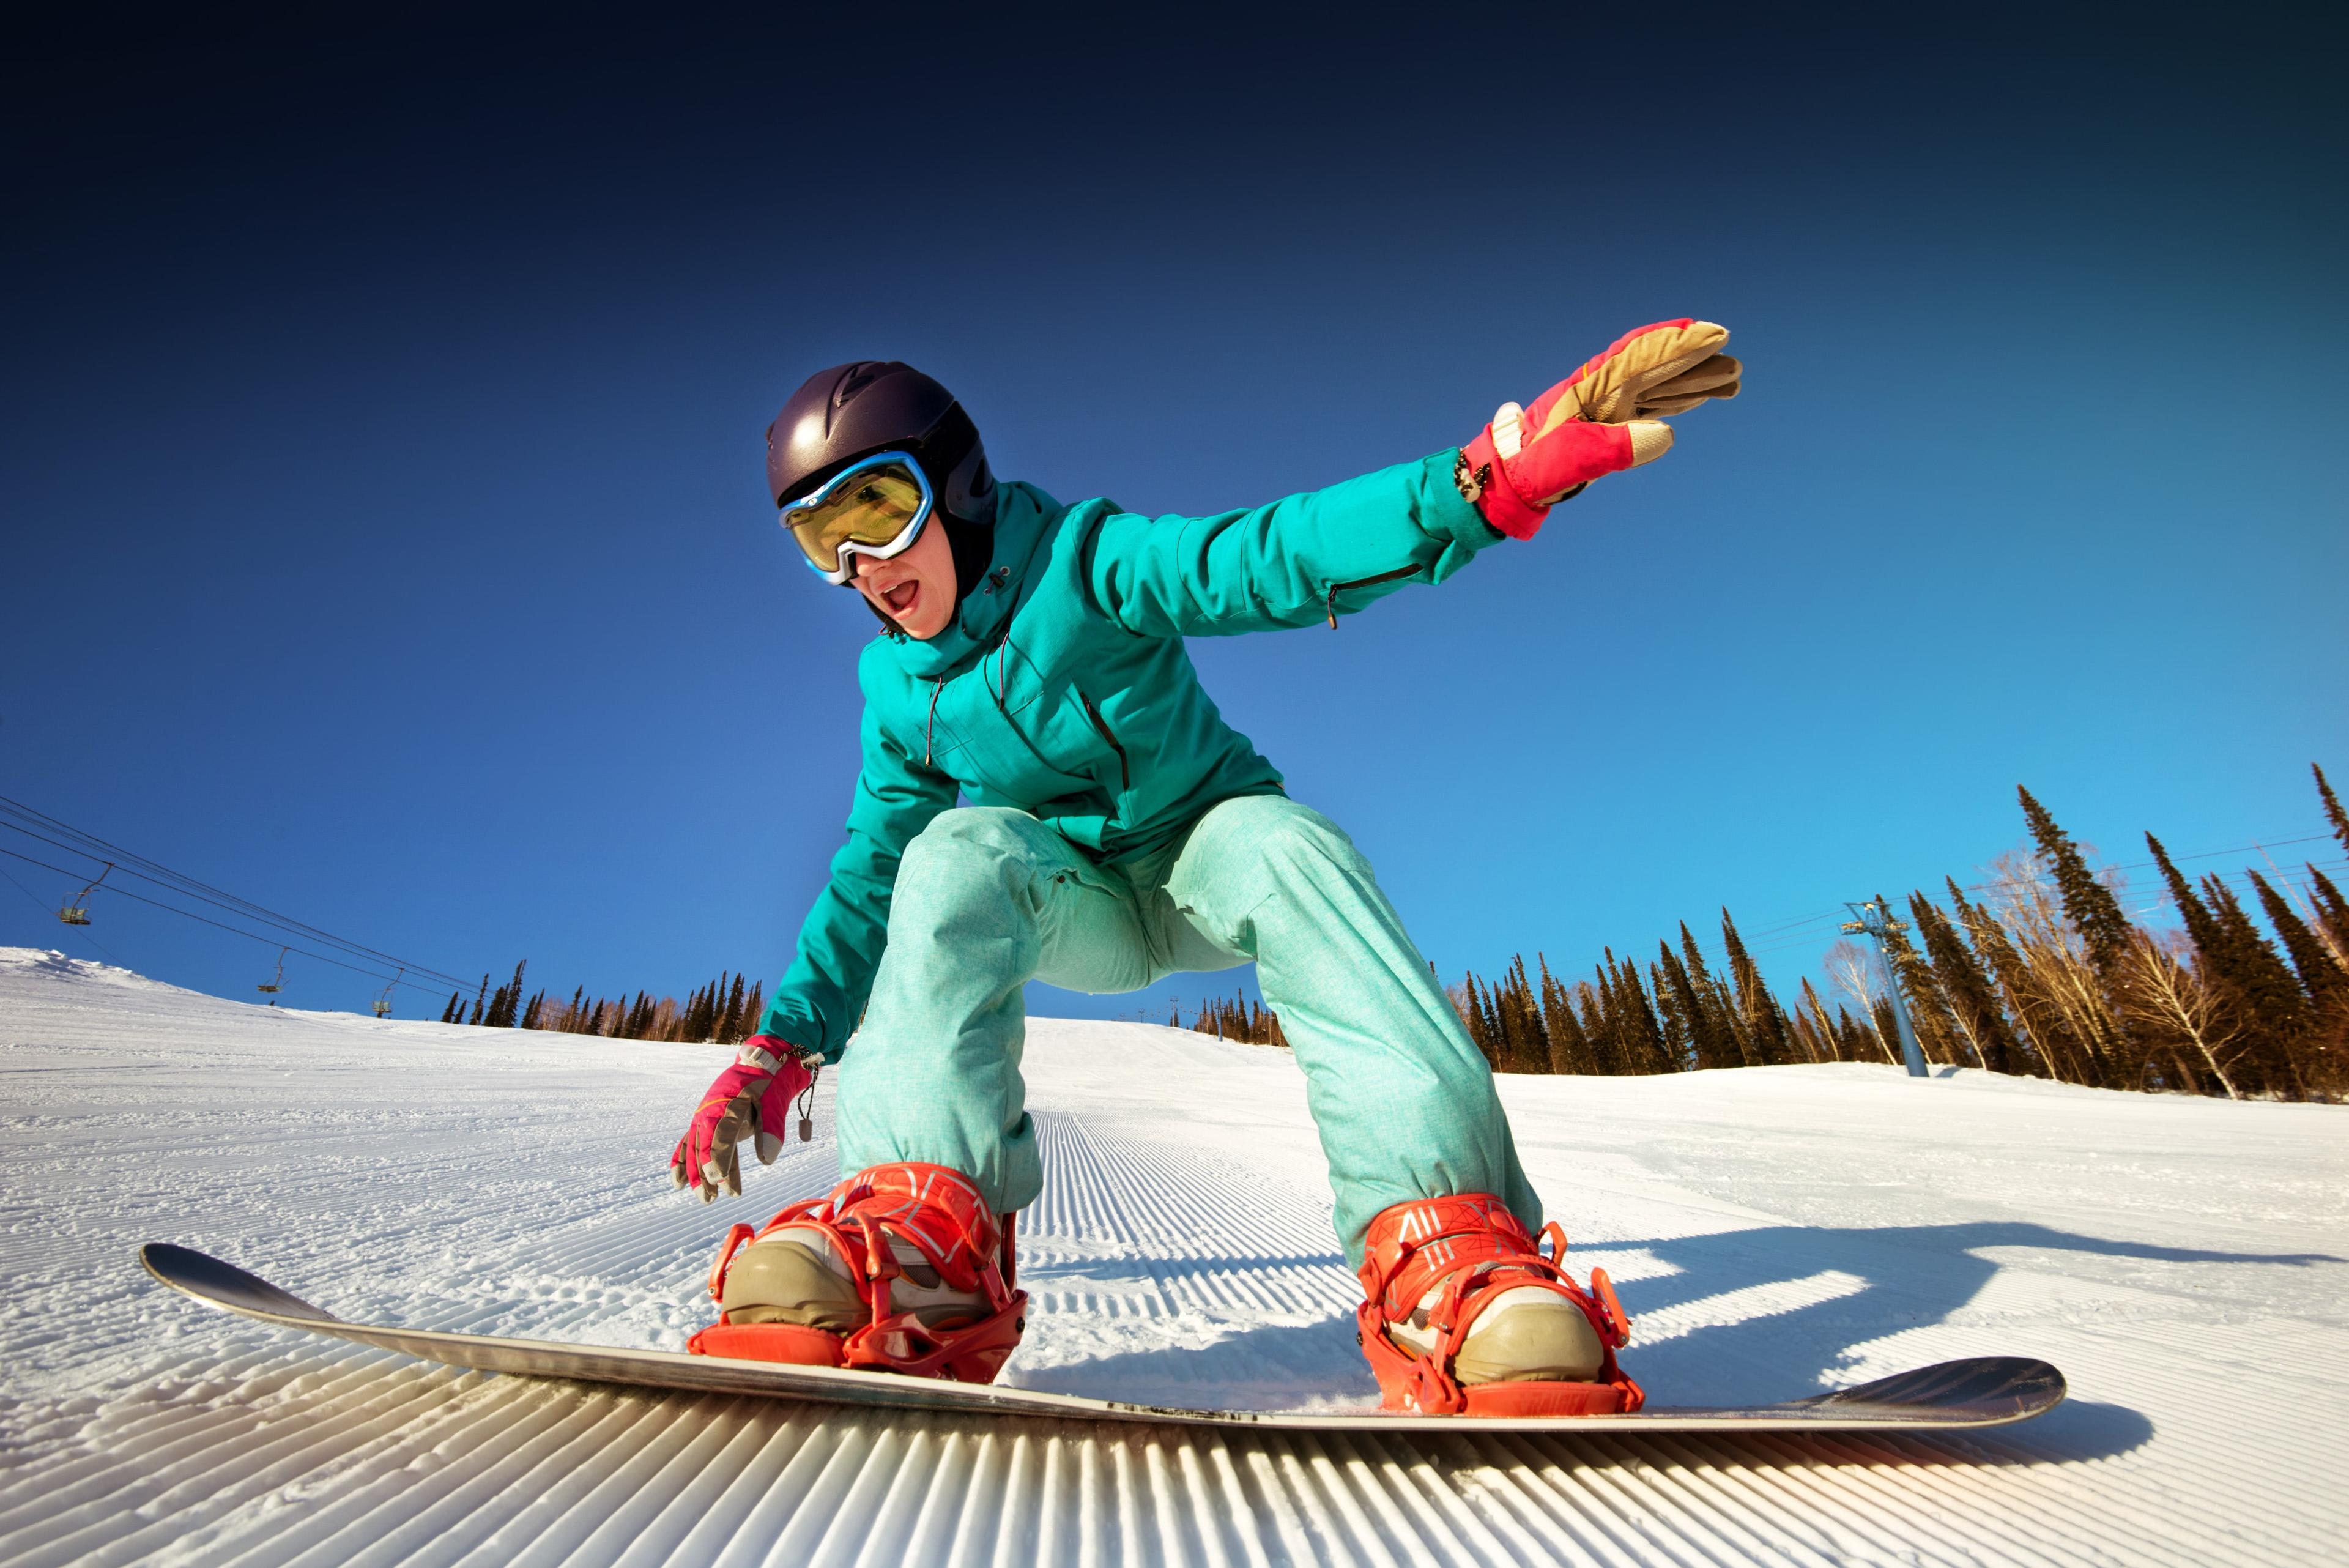 Go snowboarding. Сноуборд. Сноубордист. Девушка на лыжах. Лыжи и борд.